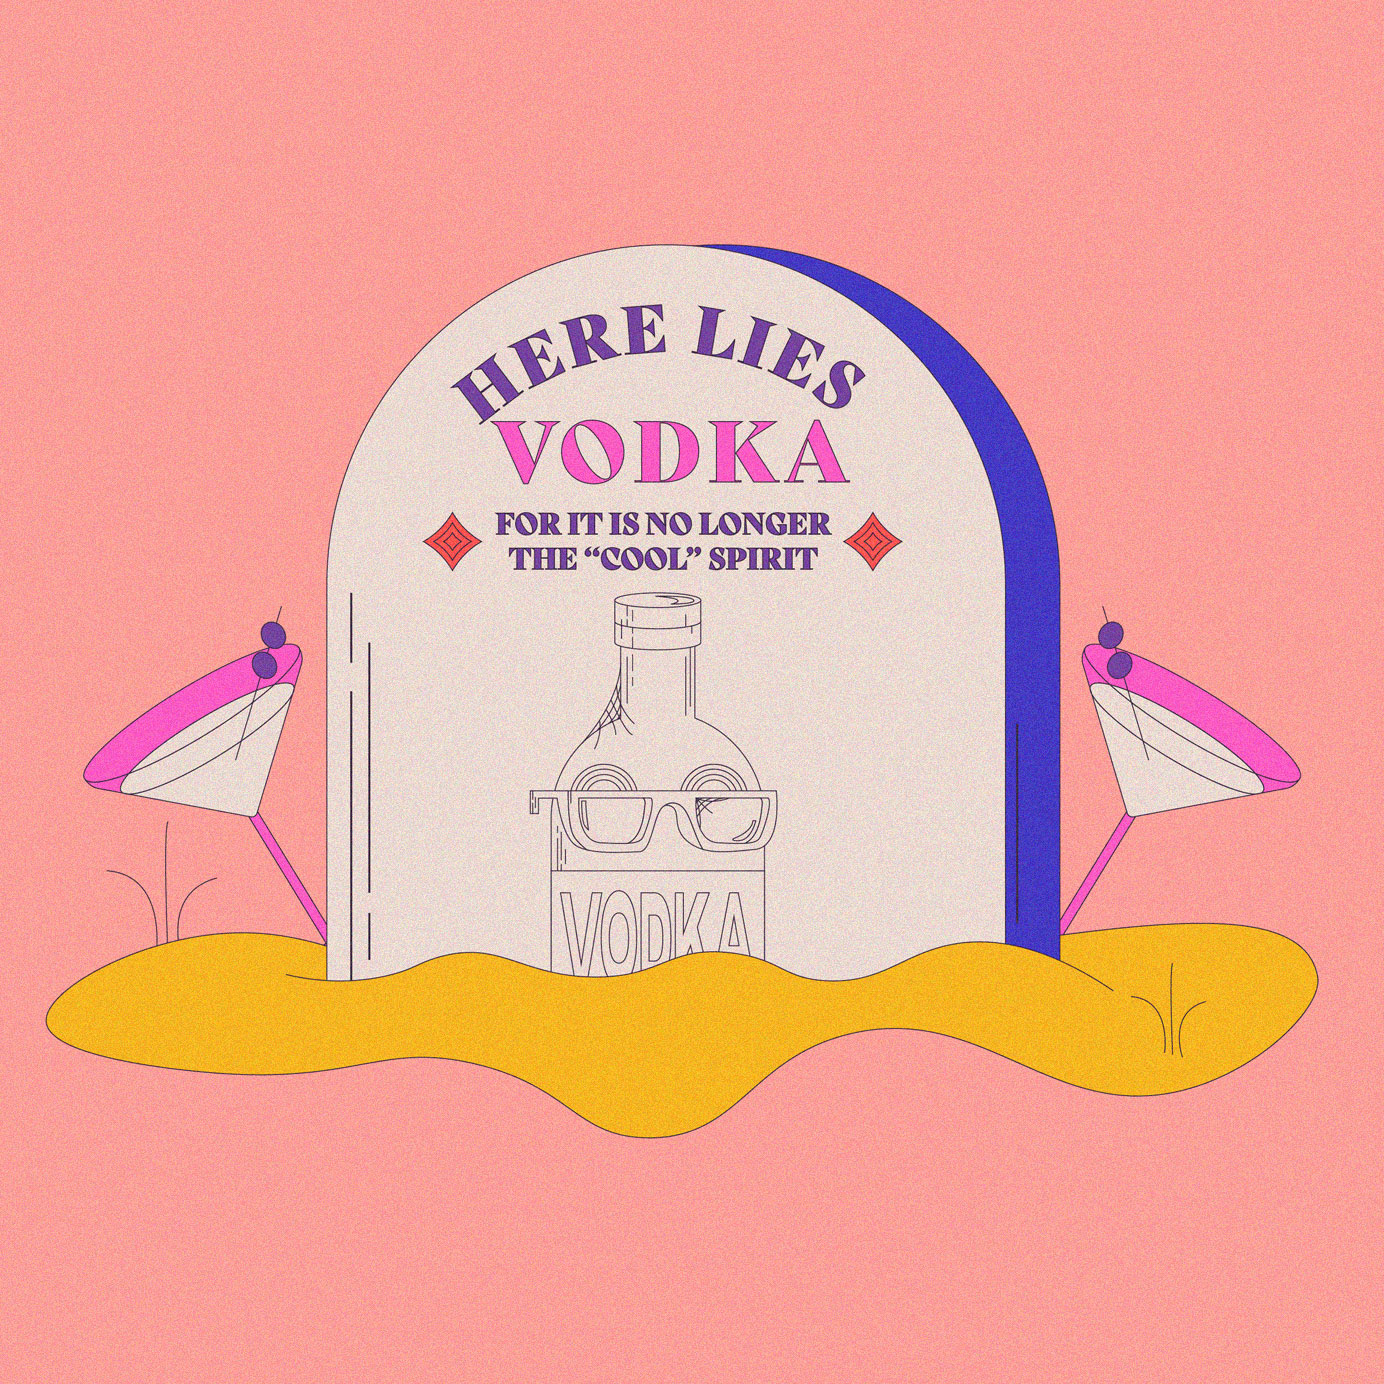 How Vodka, America's Favorite Spirit, Lost Its Luster